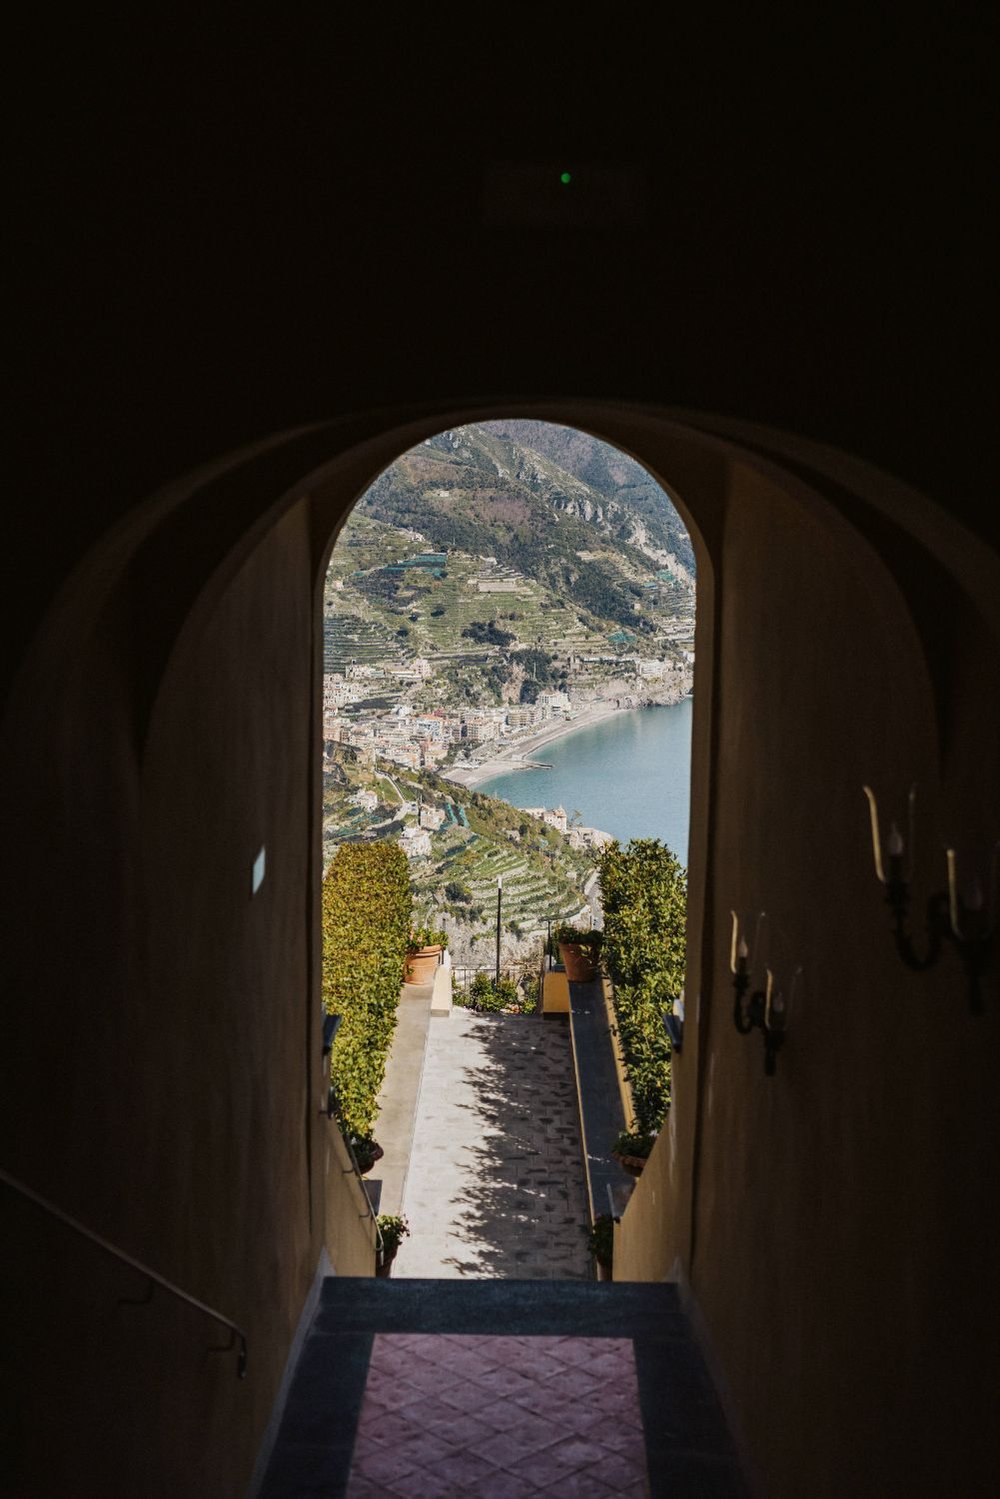 Caruso, A Belmond Hotel, Amalfi Coast, Italy